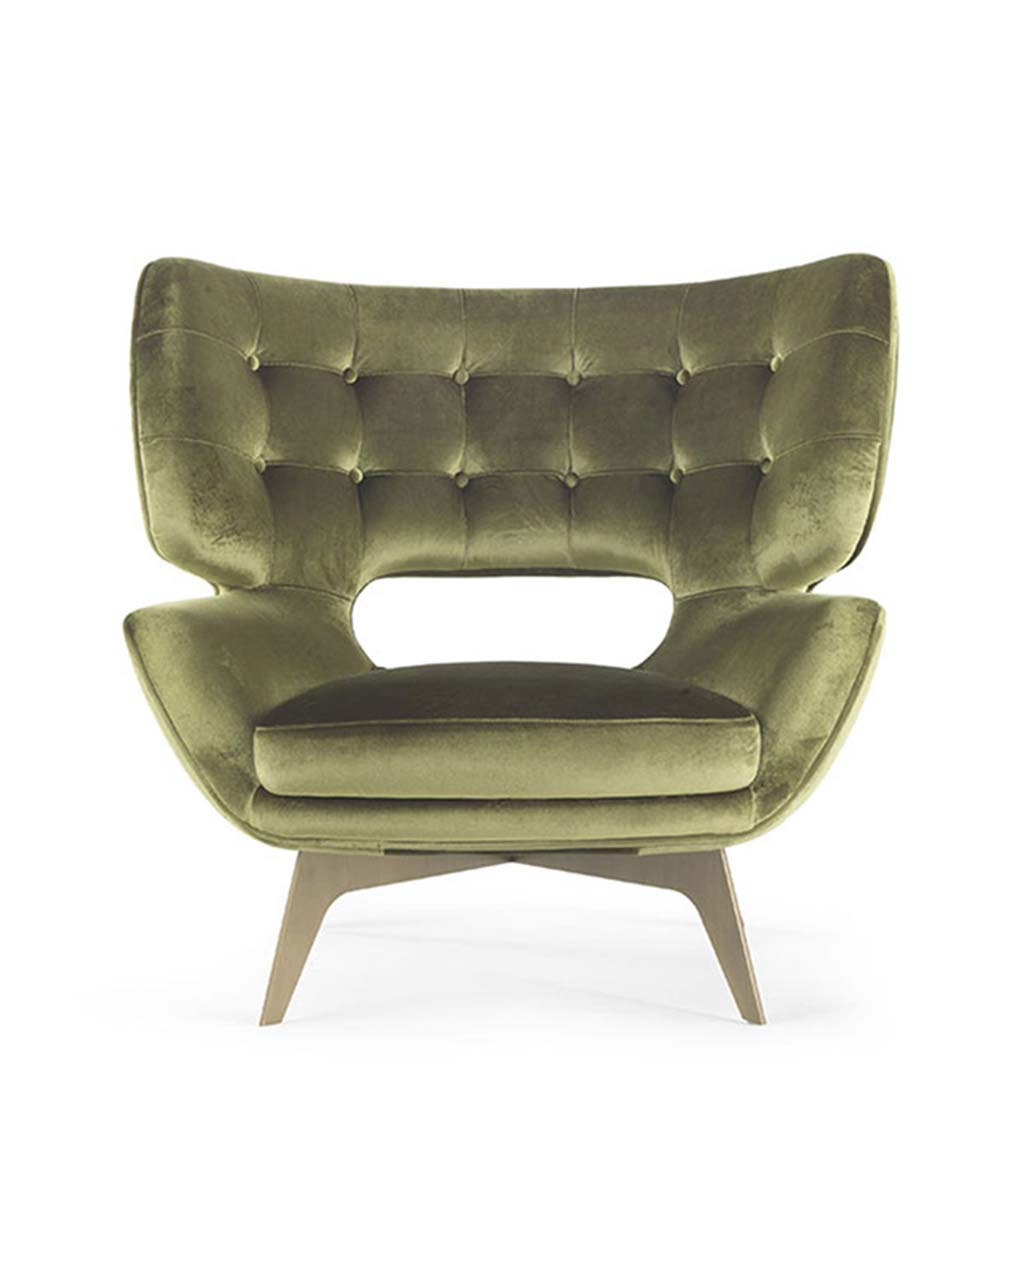 Roberto Cavalli MacLaine Chair $13,000